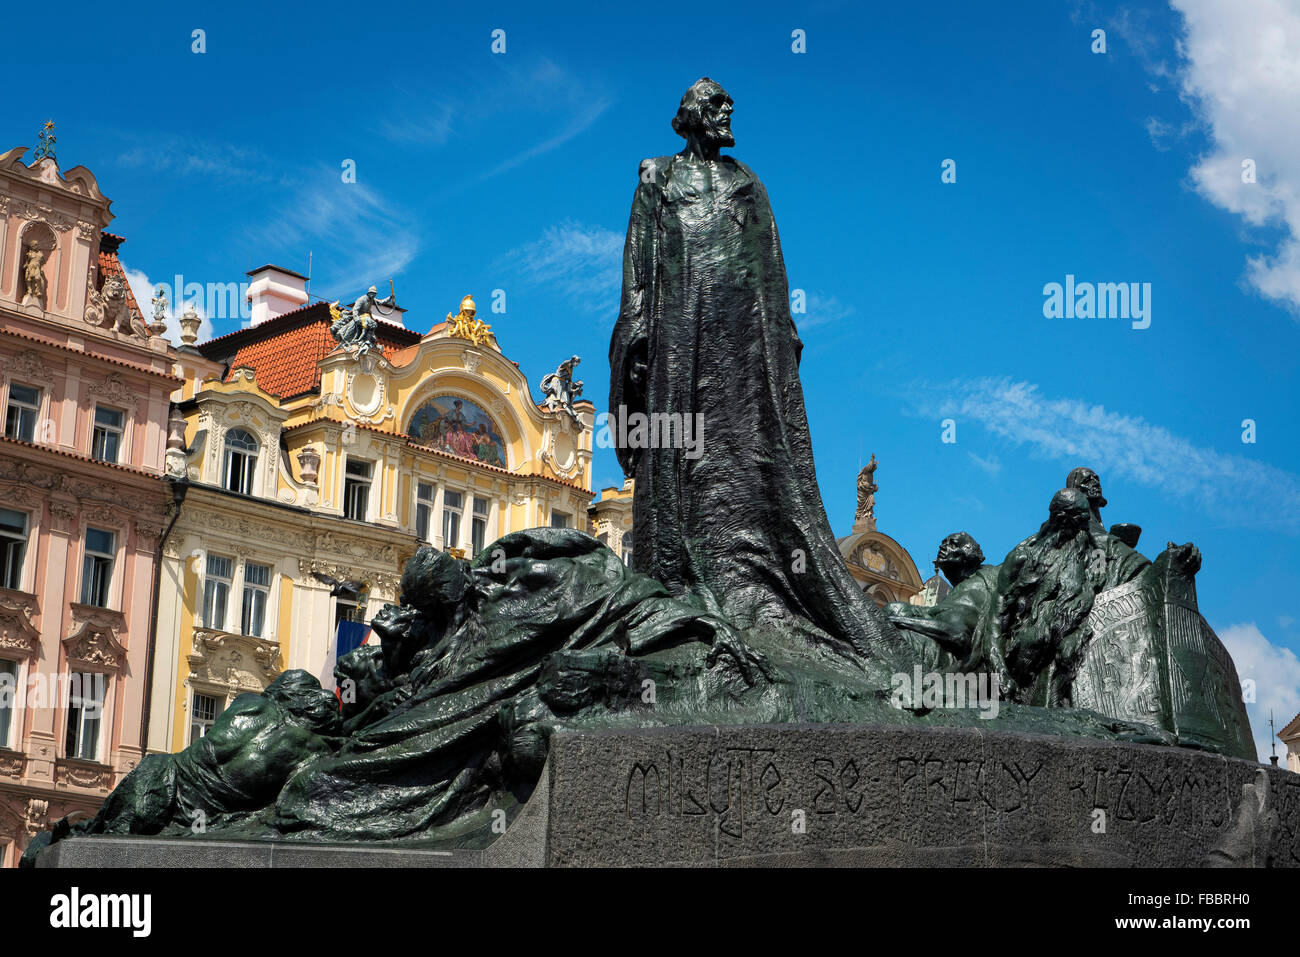 Jan Hus Monumento, Plaza de la Ciudad Vieja de Praga, República Checa, Ministertvo pro mistni rozvo, ministerio de desarrollo local, Foto de stock